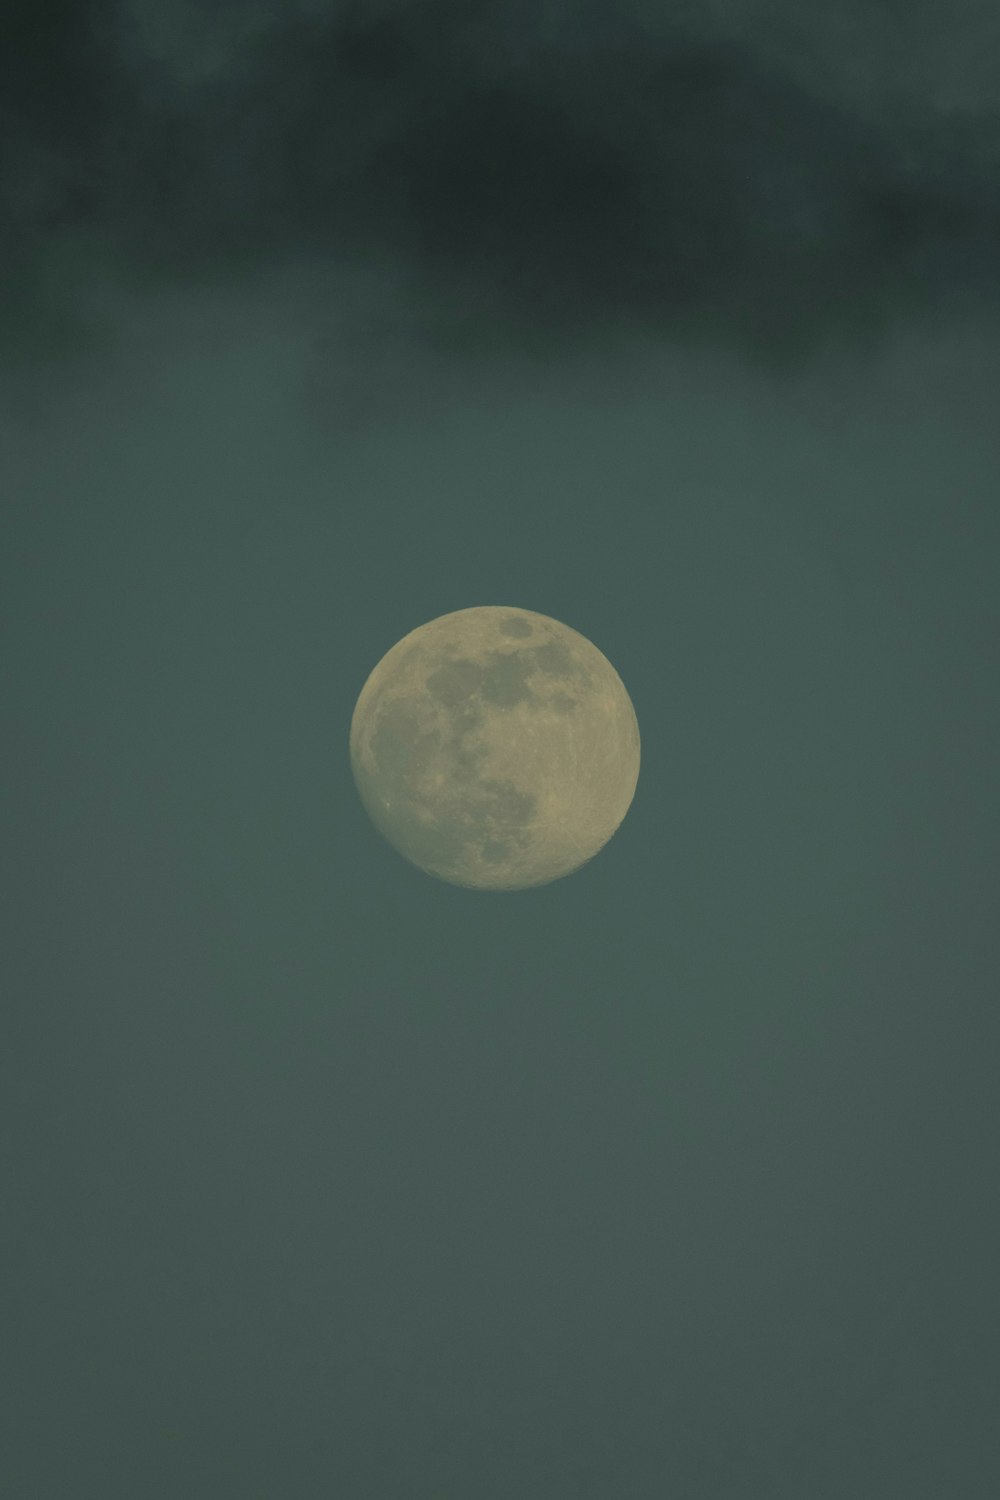 a full moon is seen through the dark clouds